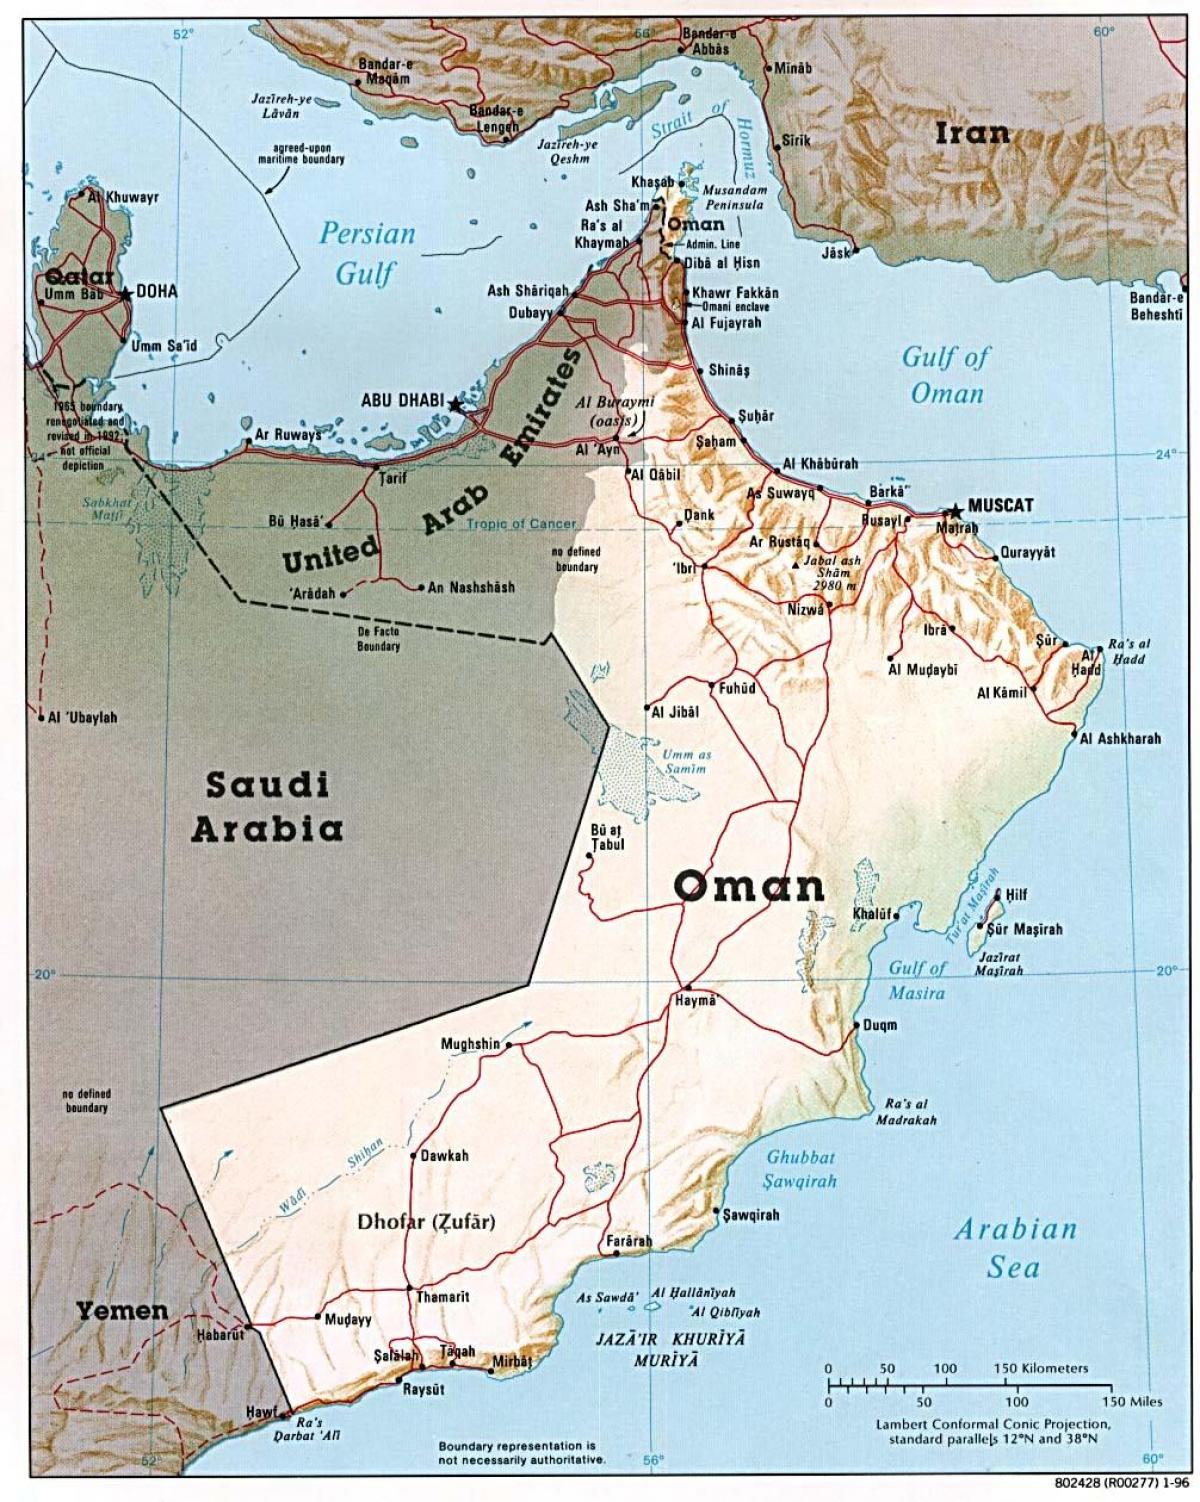 Oman peta dengan kota